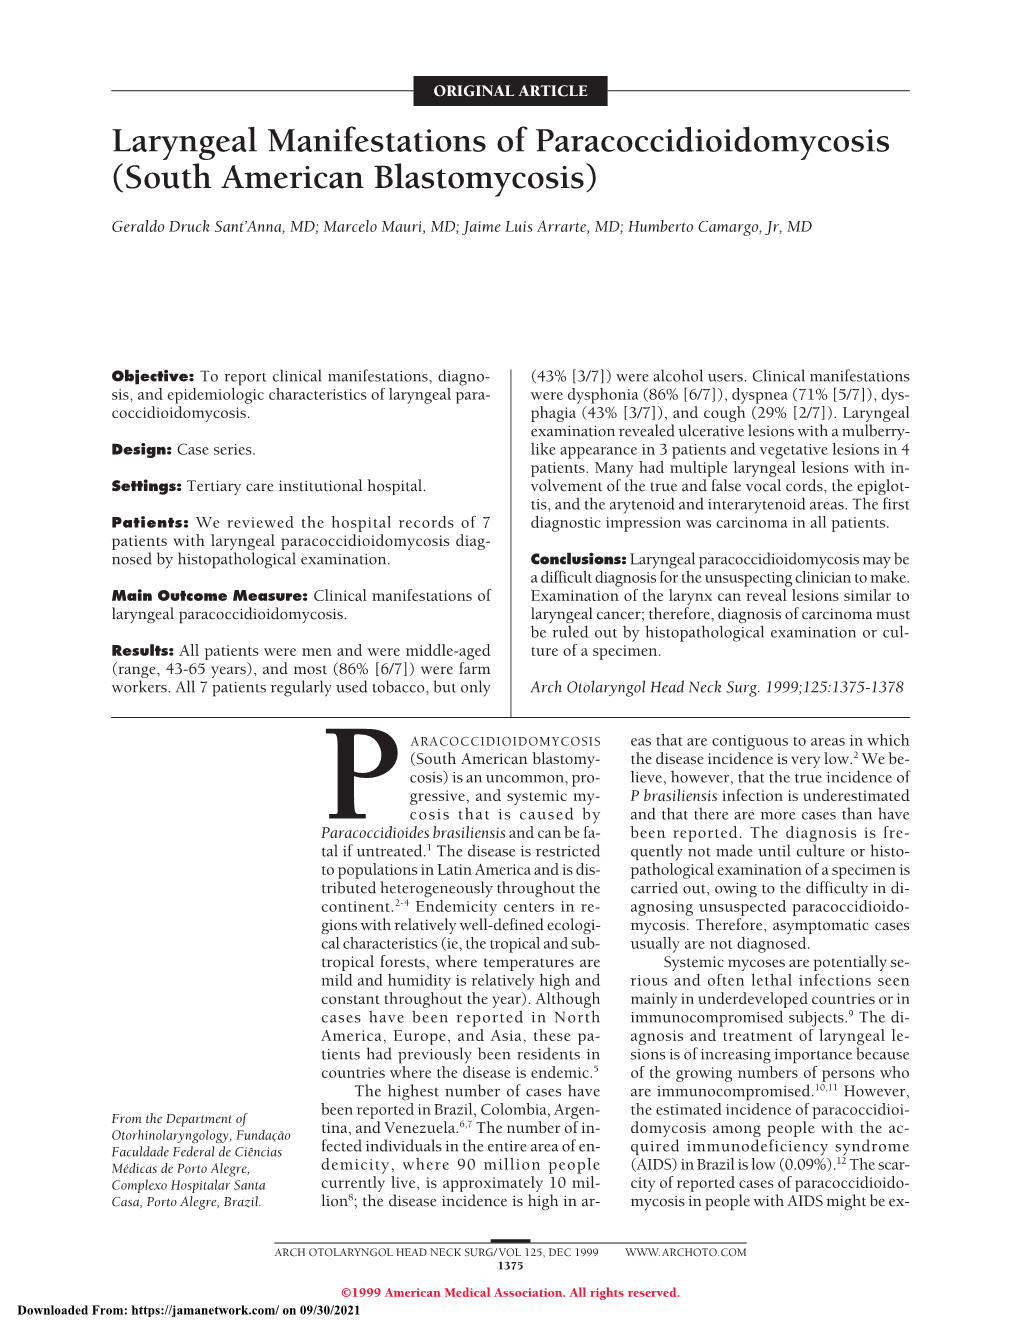 Laryngeal Manifestations of Paracoccidioidomycosis (South American Blastomycosis)